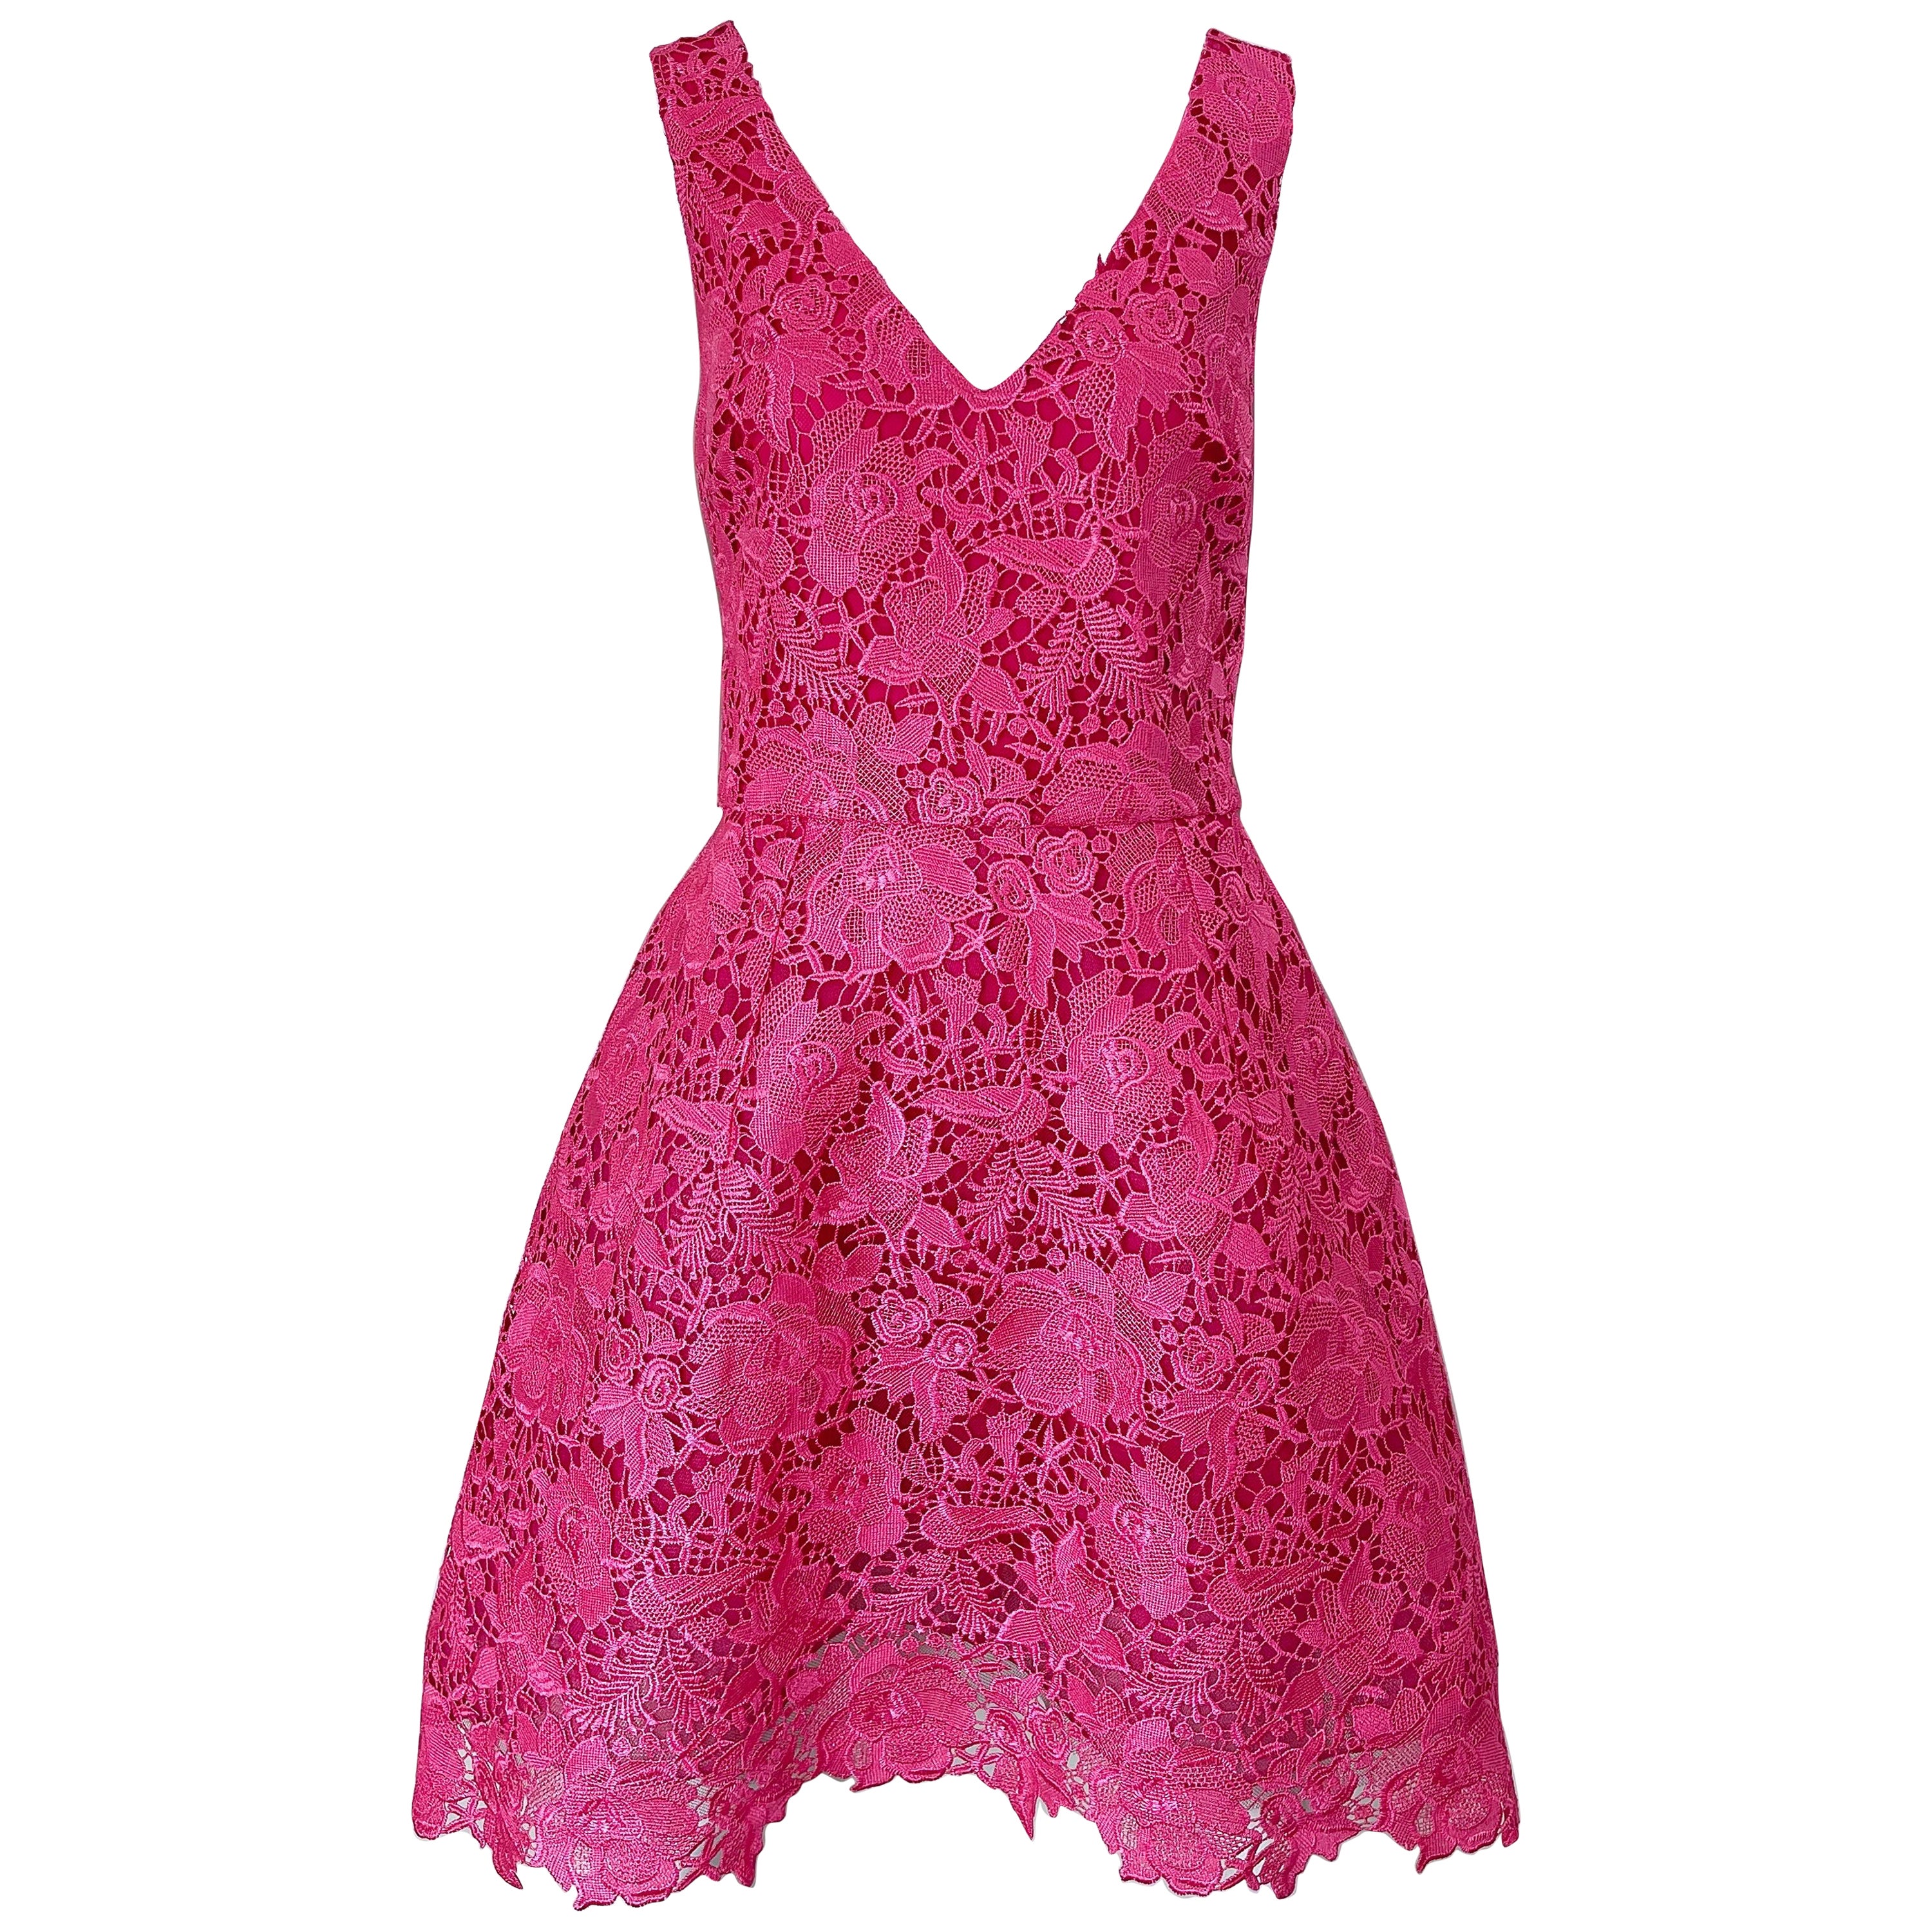 NWT Monique Lhuillier Size 8 / 10 Hot Pink Lace Fit n Flare A Line Dress For Sale